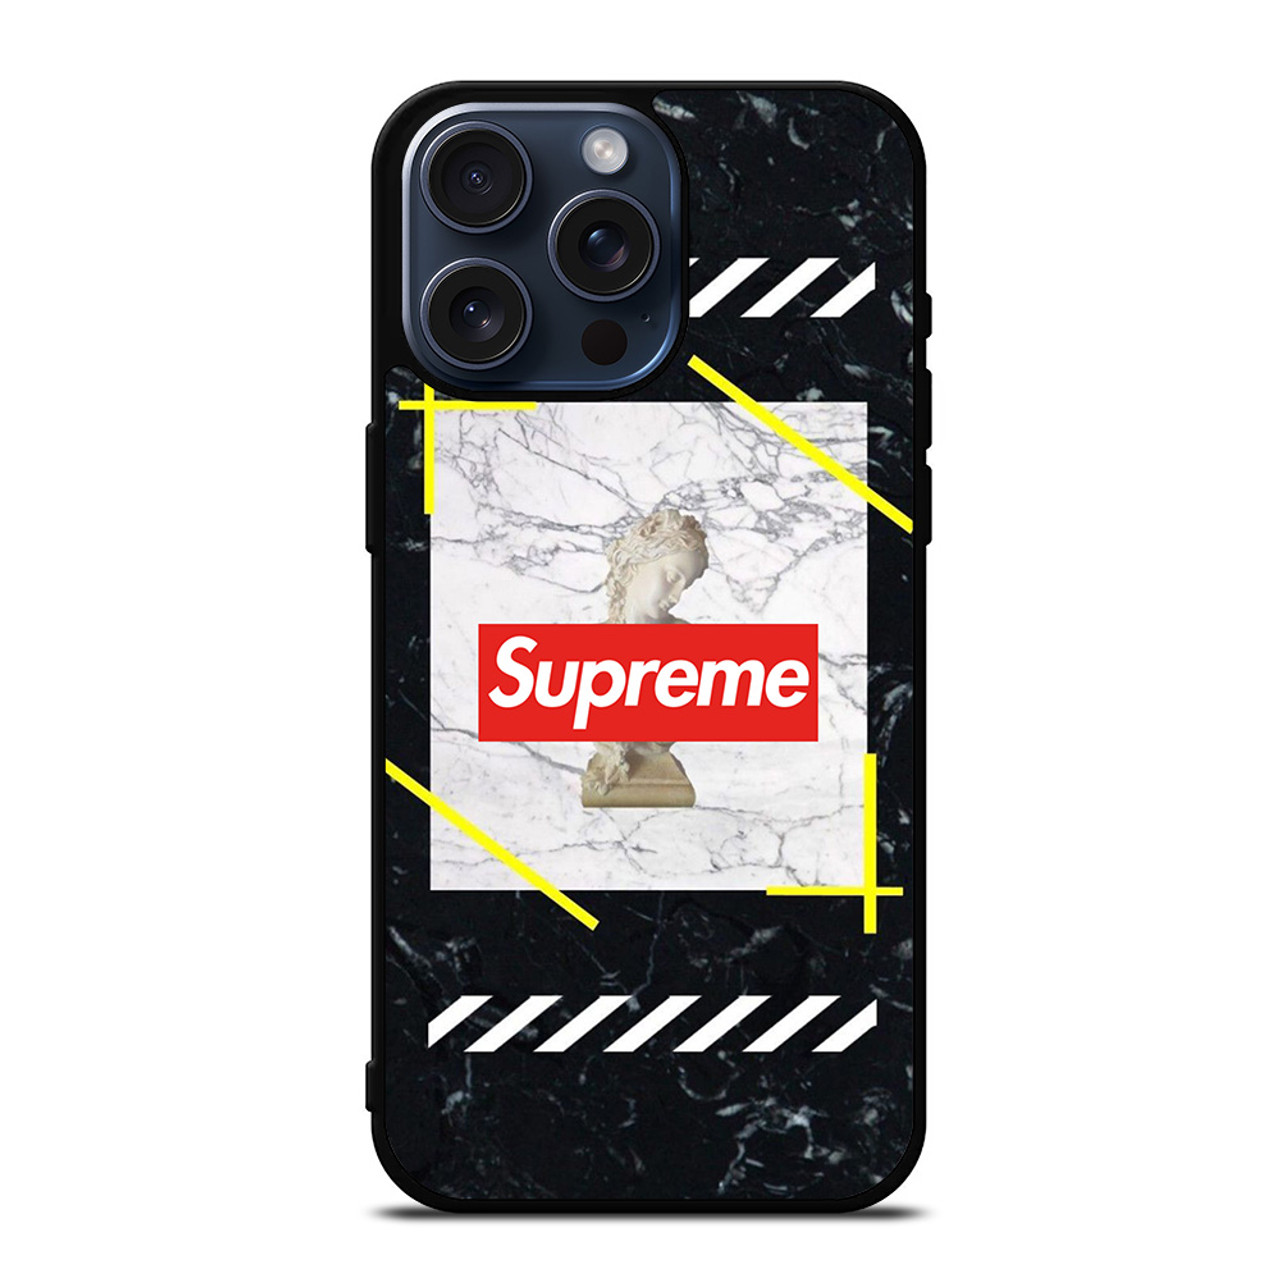 Supreme iPhone 11 Cases